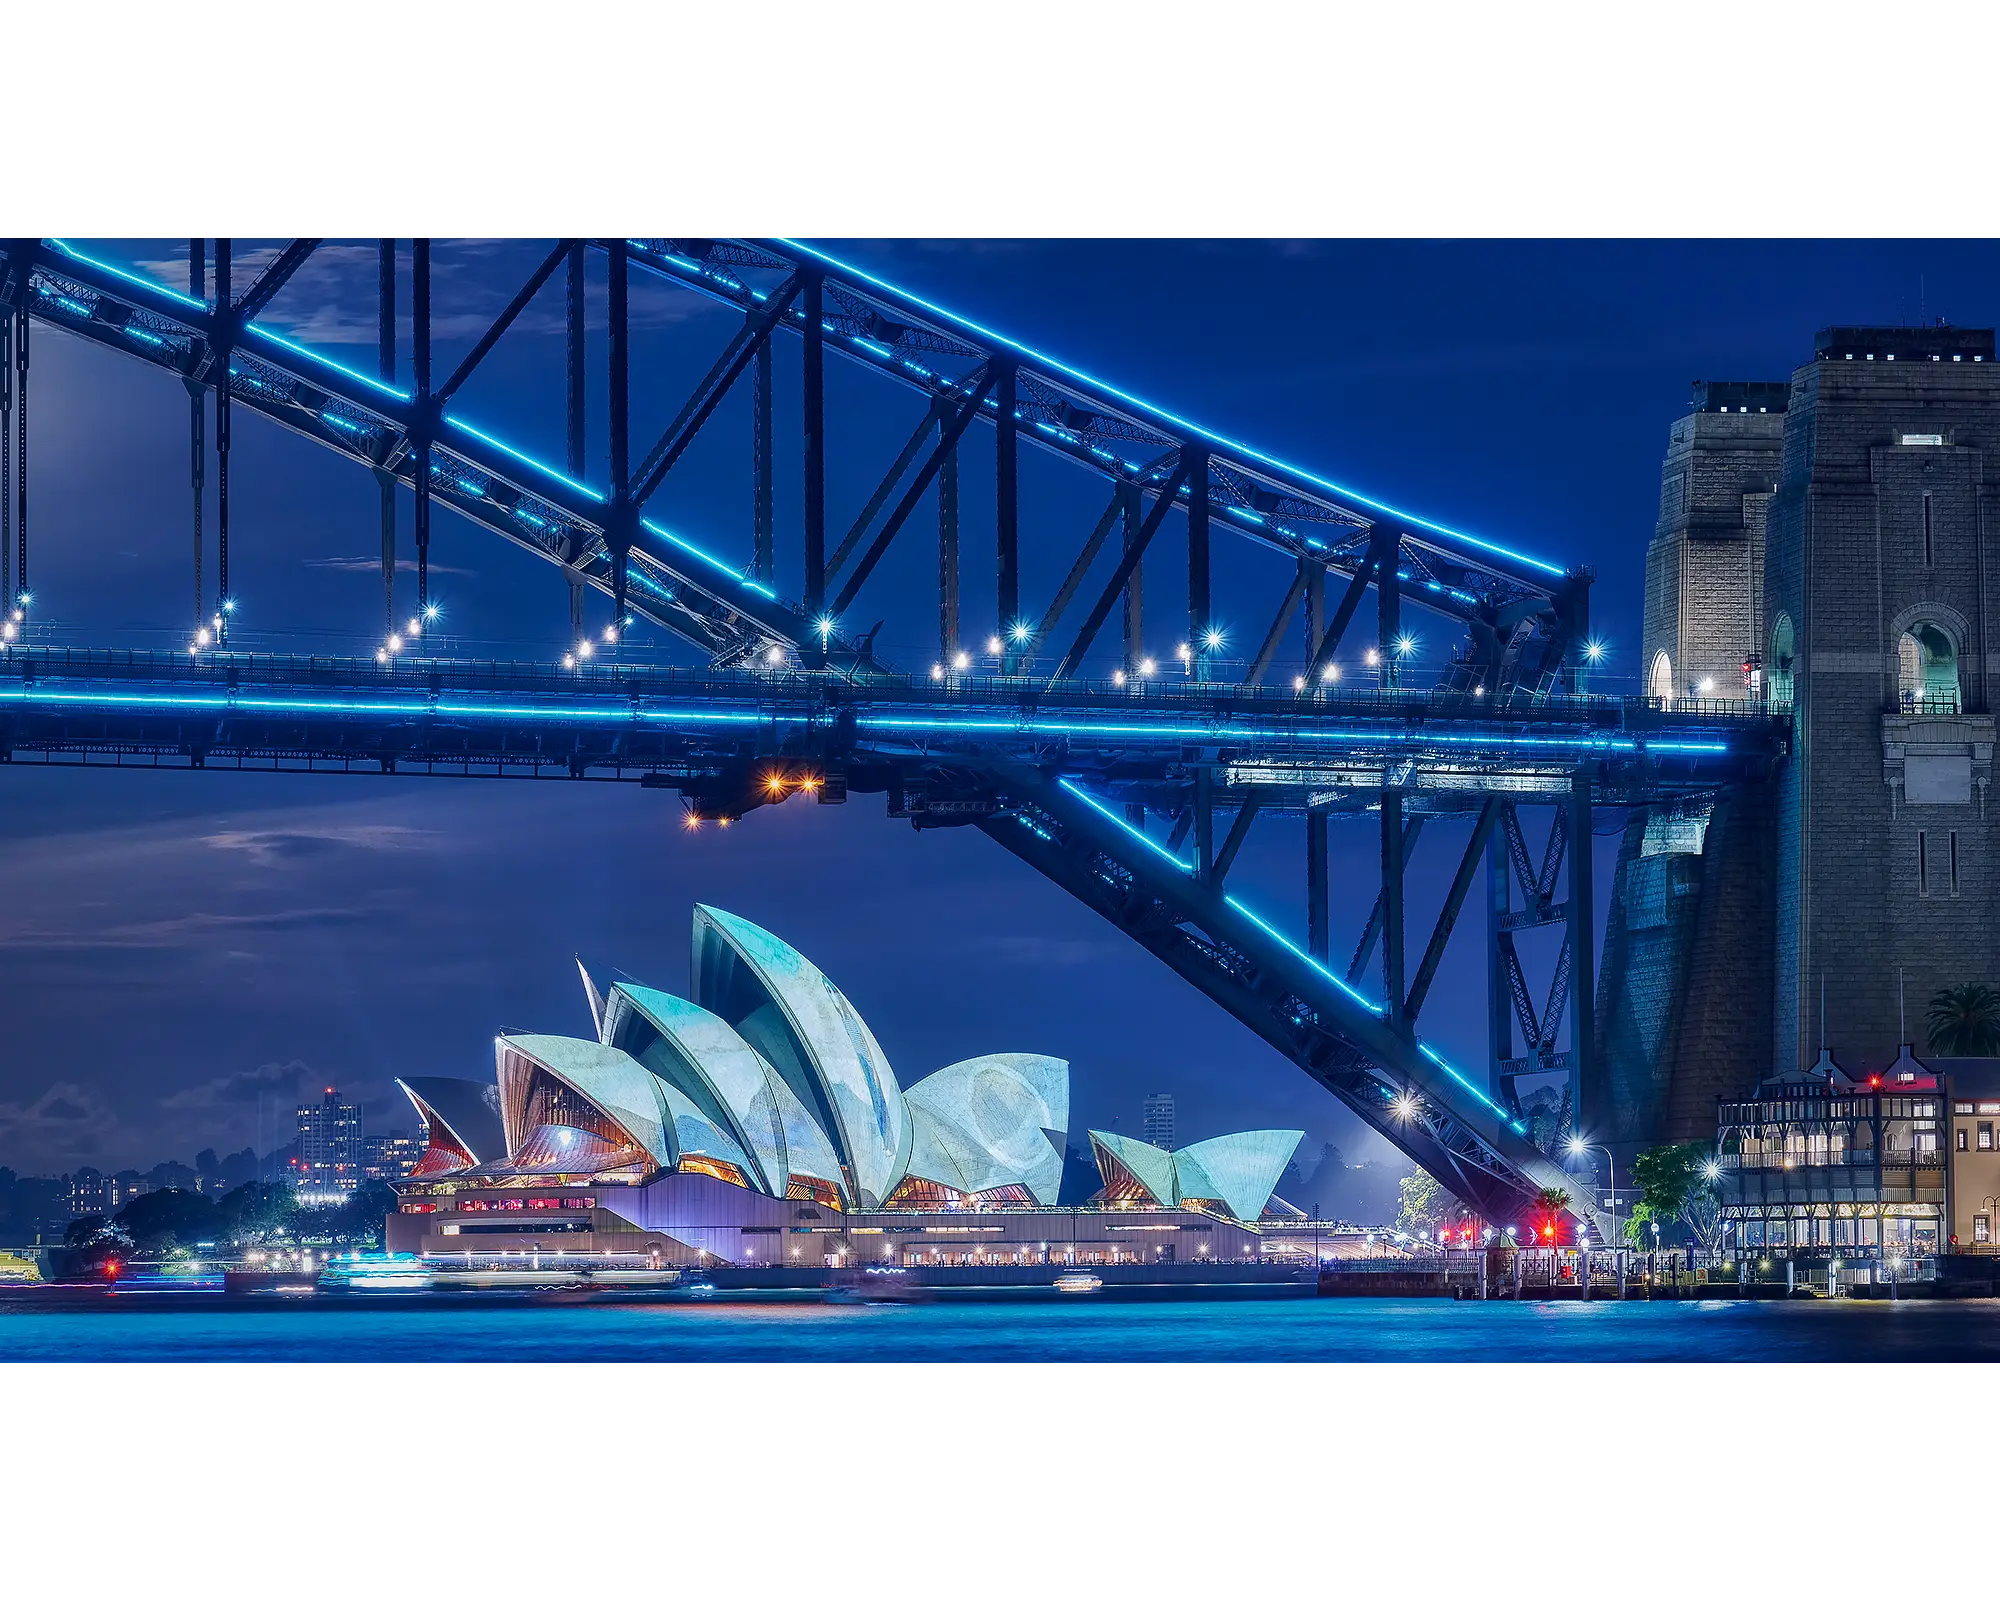 Sydney Harbour Bridge and Sydney Opera House lit up during Vivid Sydney.